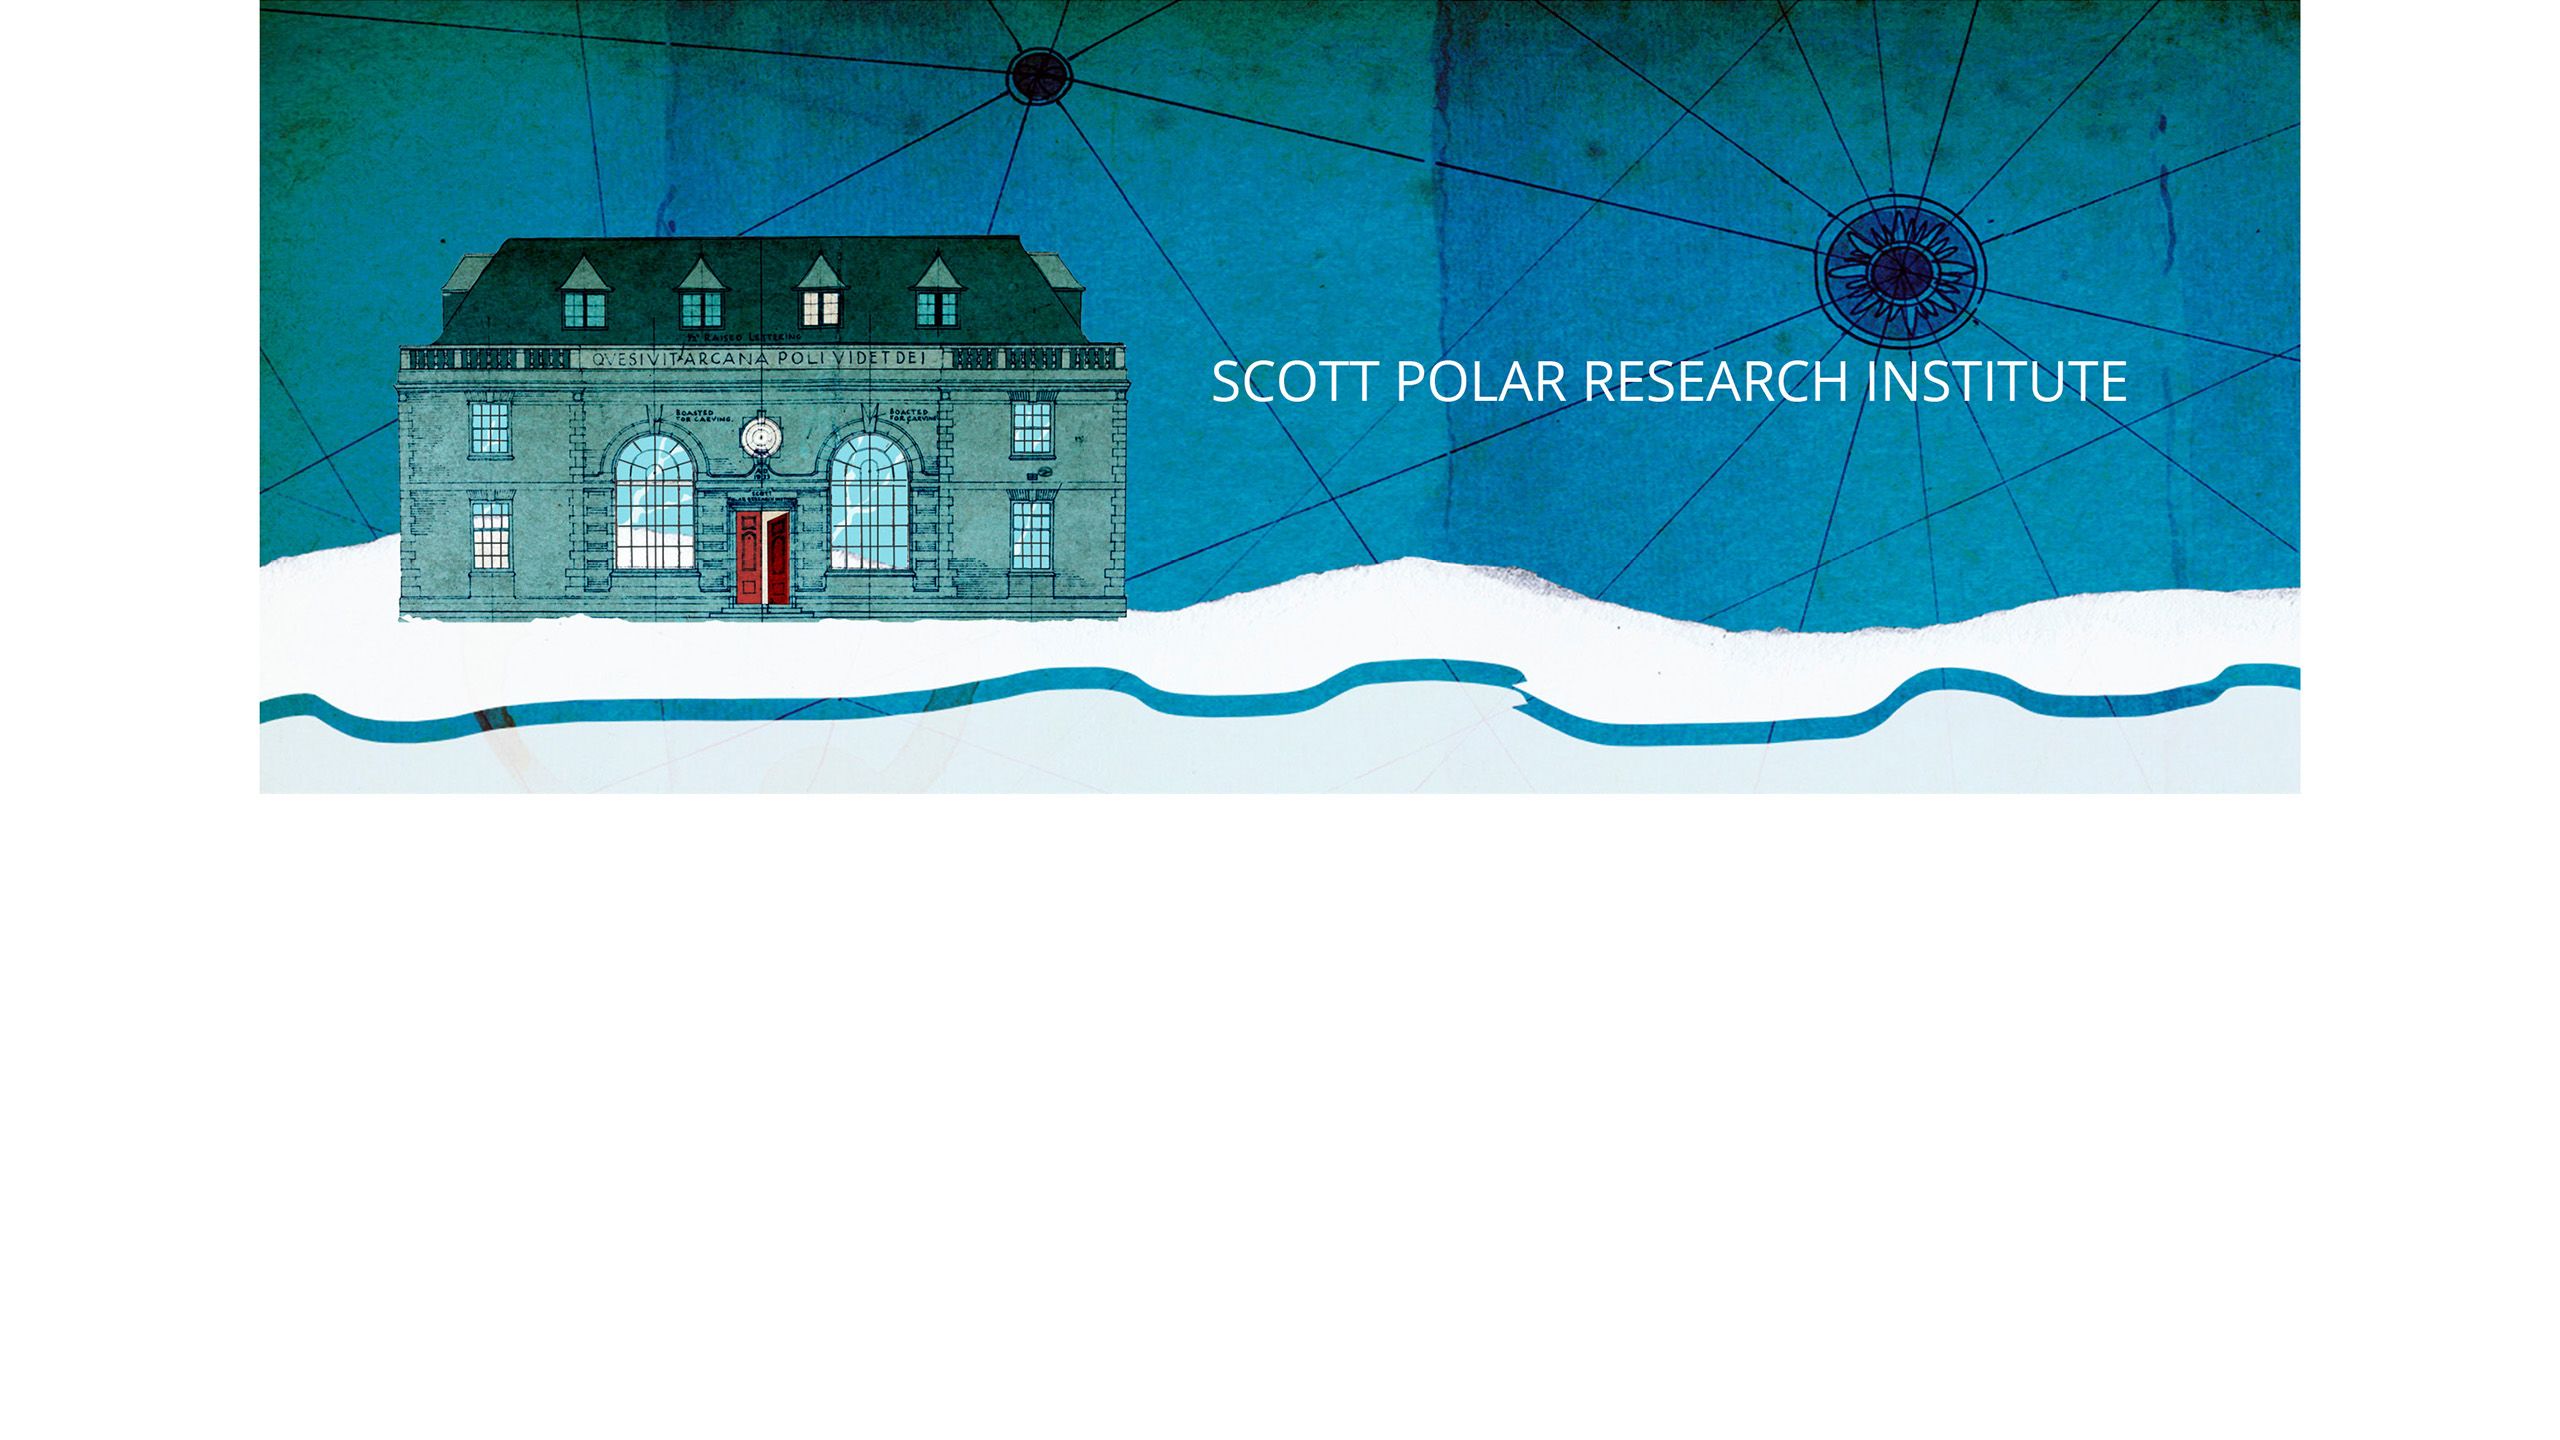 Scott Polar Research Institute, A Century of Polar Research